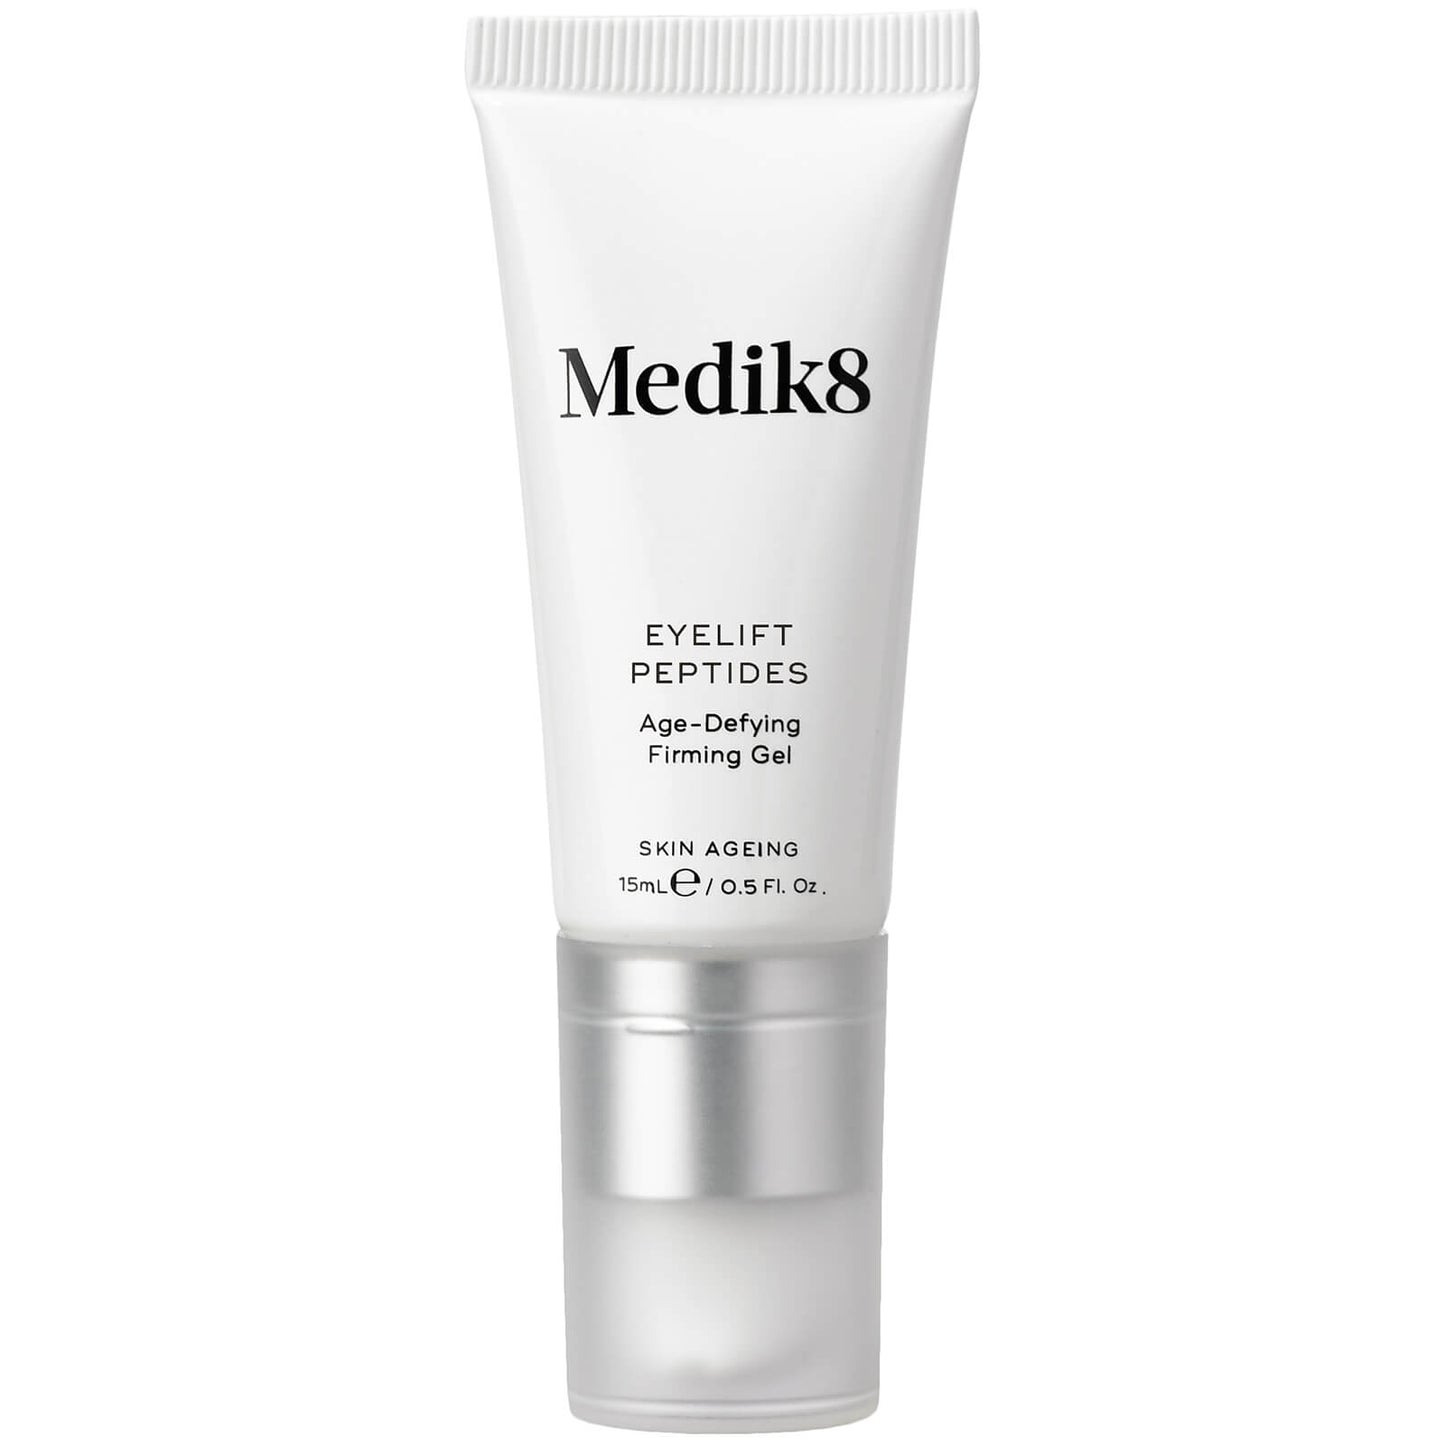 Medik8 Eyelift Peptides 15ml Age-Defying gel